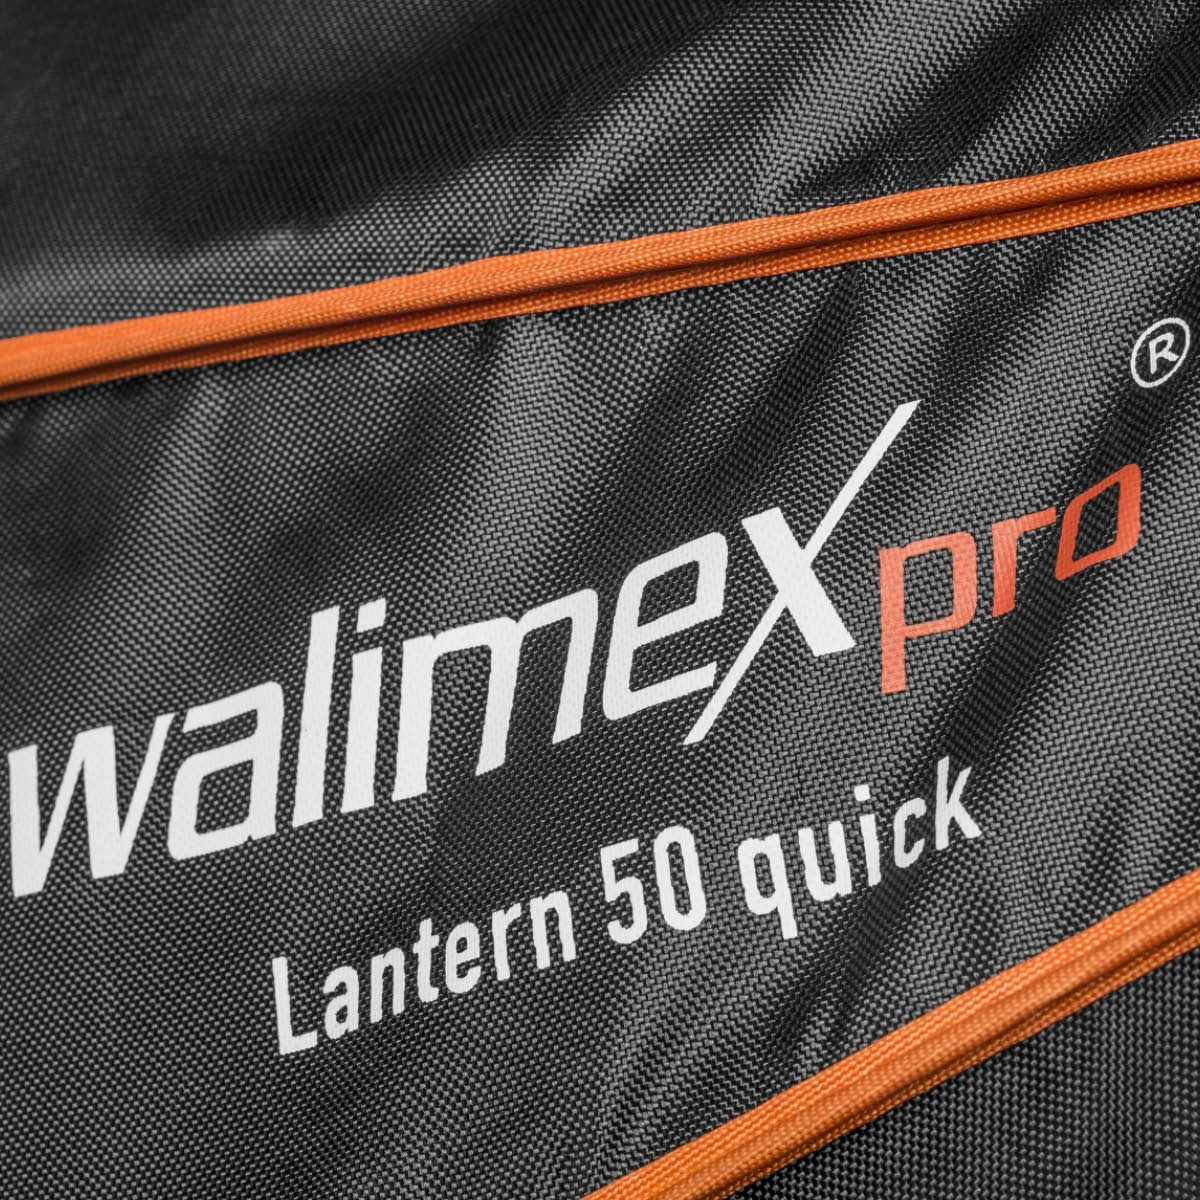 Walimex pro 360° Ambient Light Softbox 50 cm